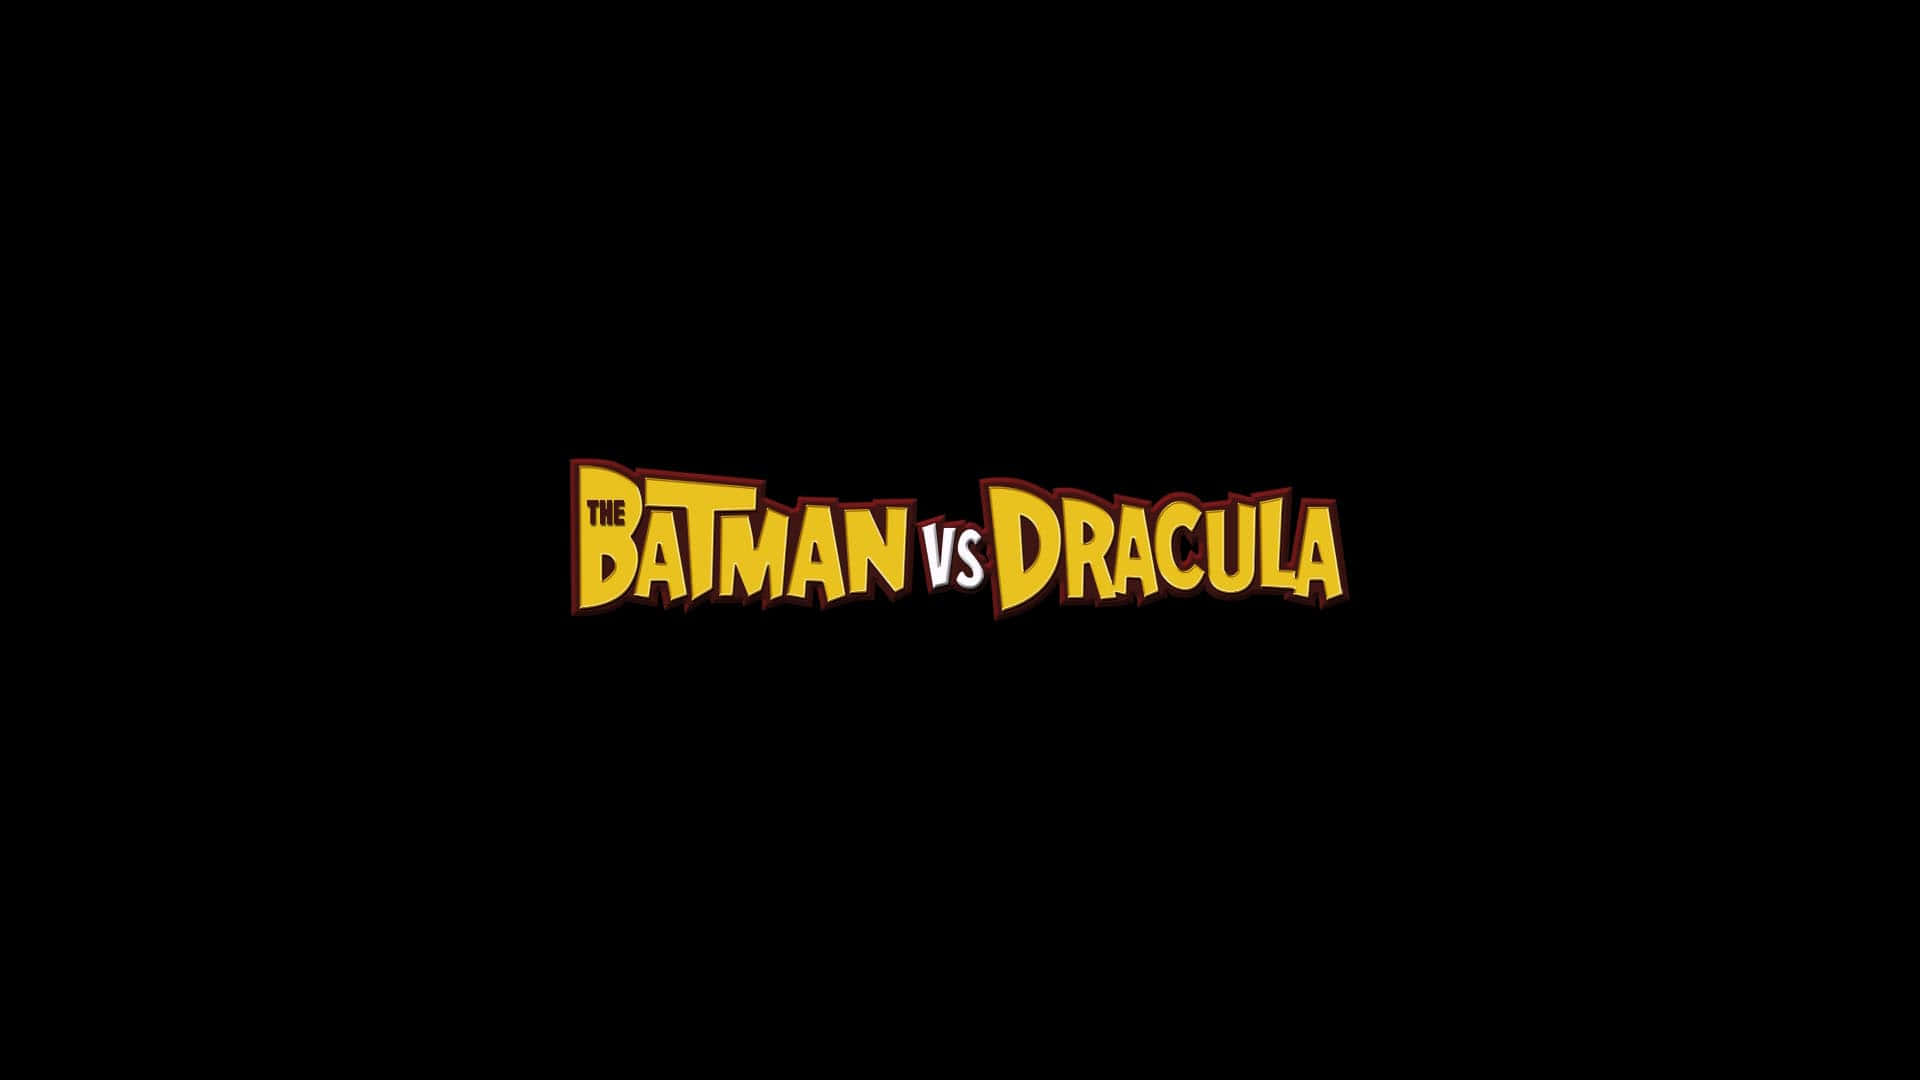 The Epic Battle Between The Batman and Dracula Wallpaper